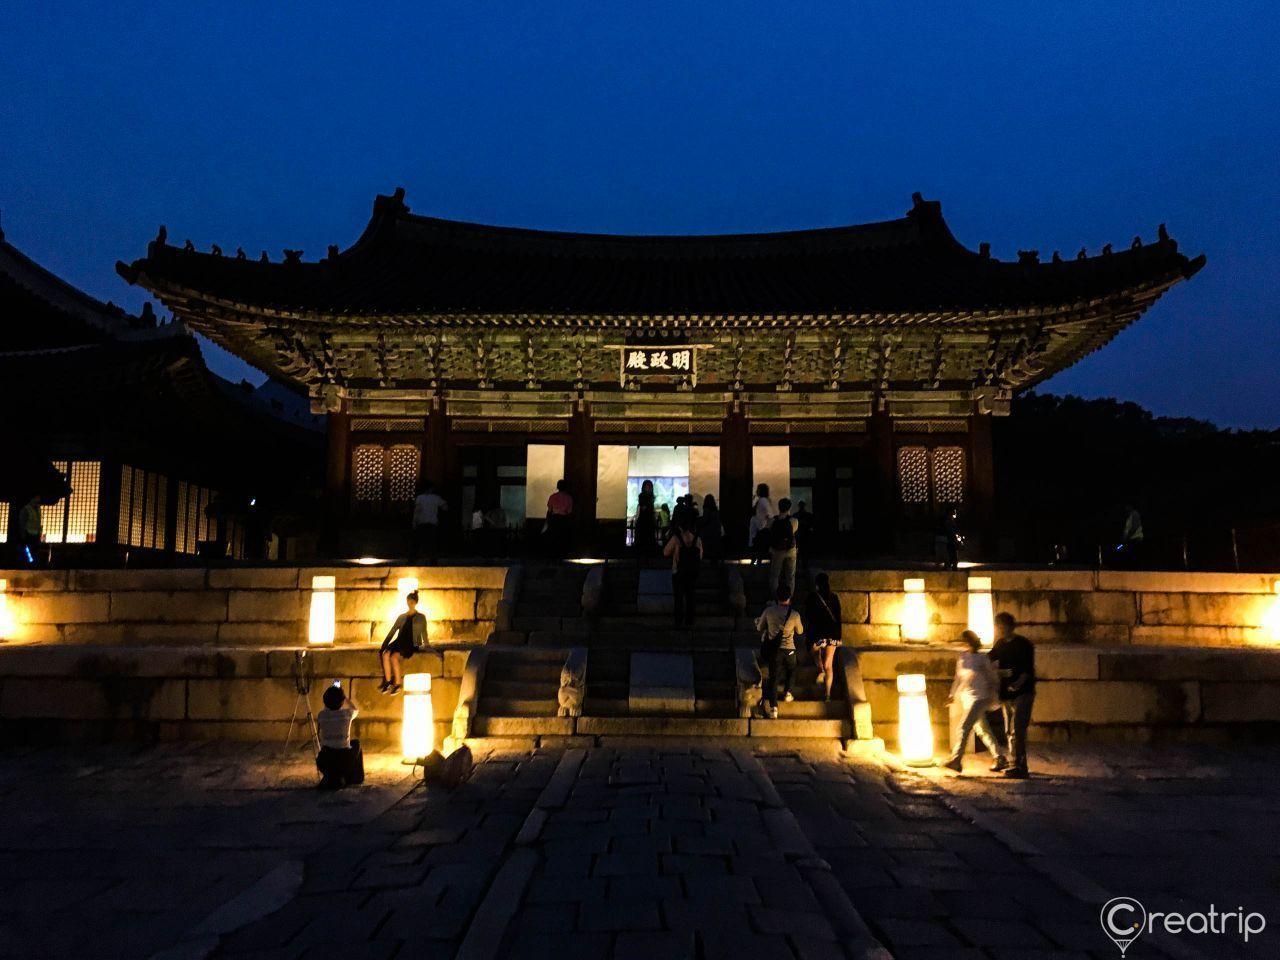 Creatrip: Best Night View Locations of Seoul - Seoul/Korea (Travel ...